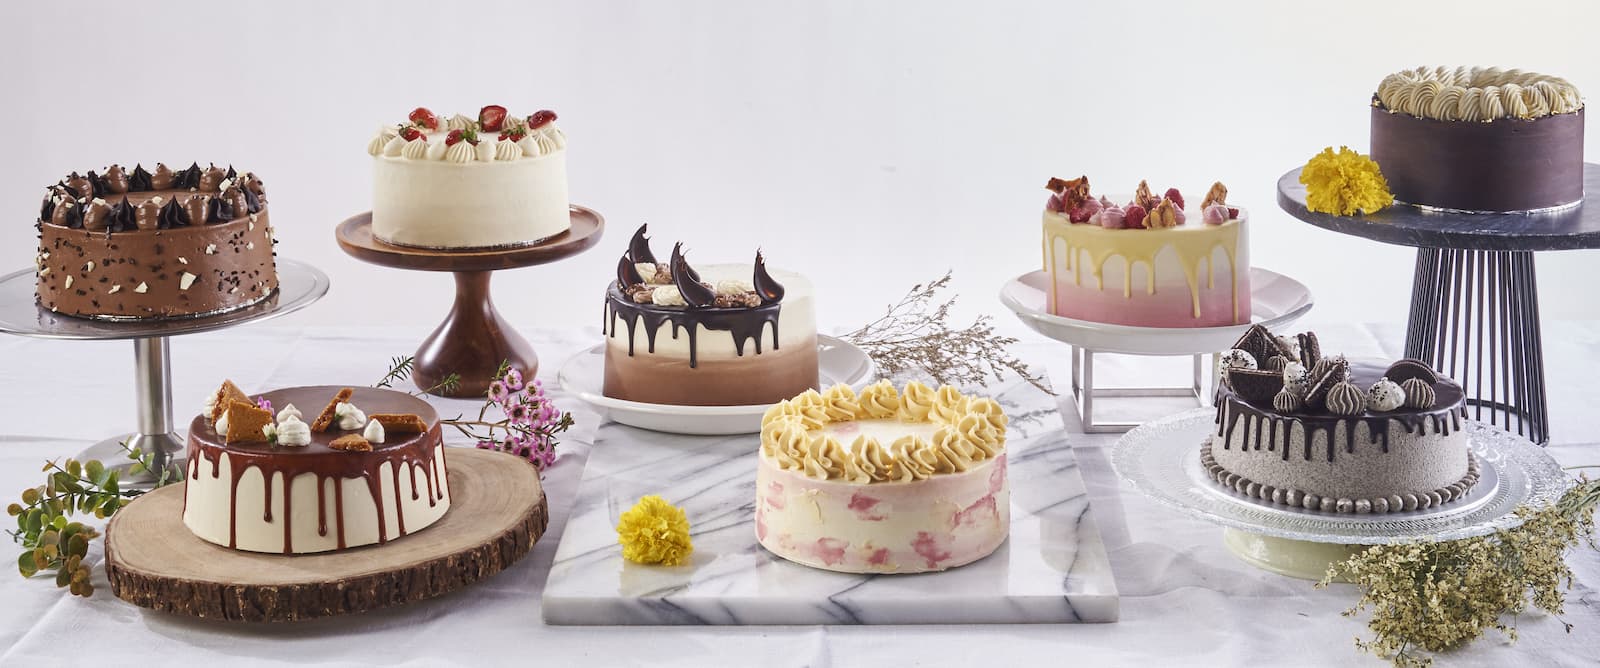 16 Beautiful Birthday Cakes For Anyone's Birthday Party - MoneyKinetics.sg